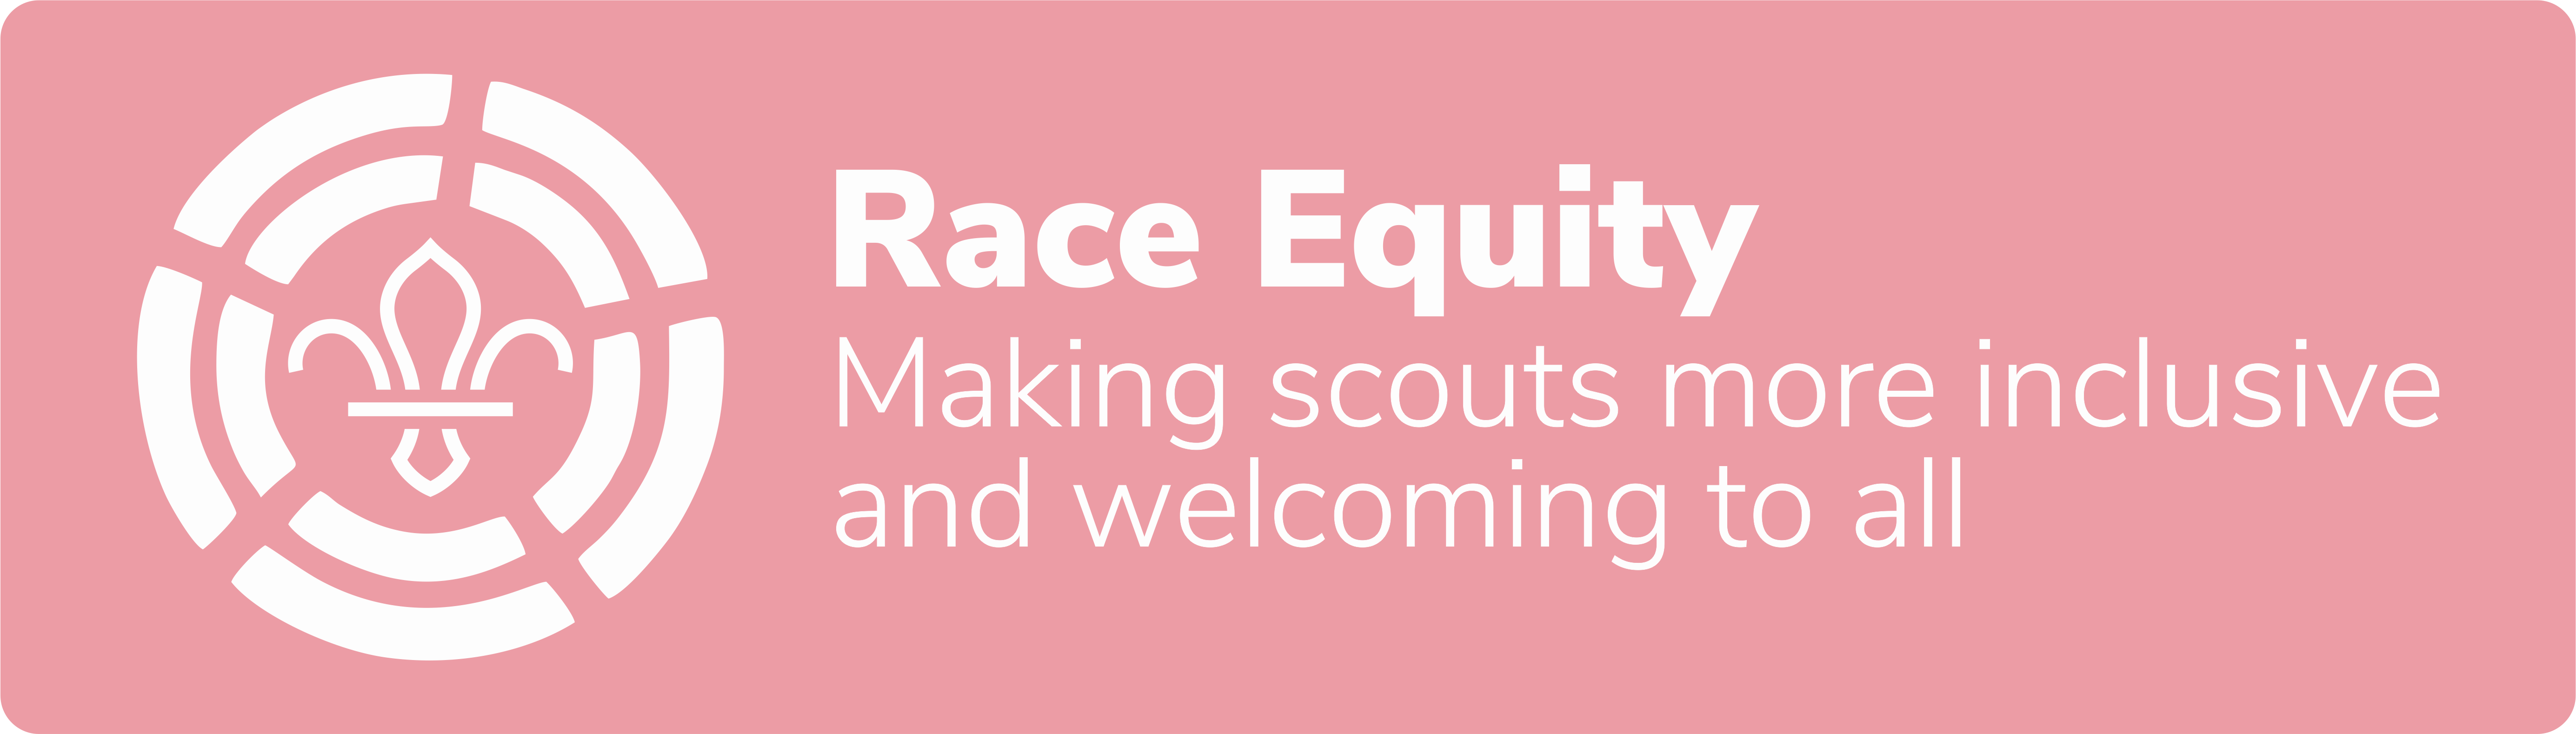 Race Equity